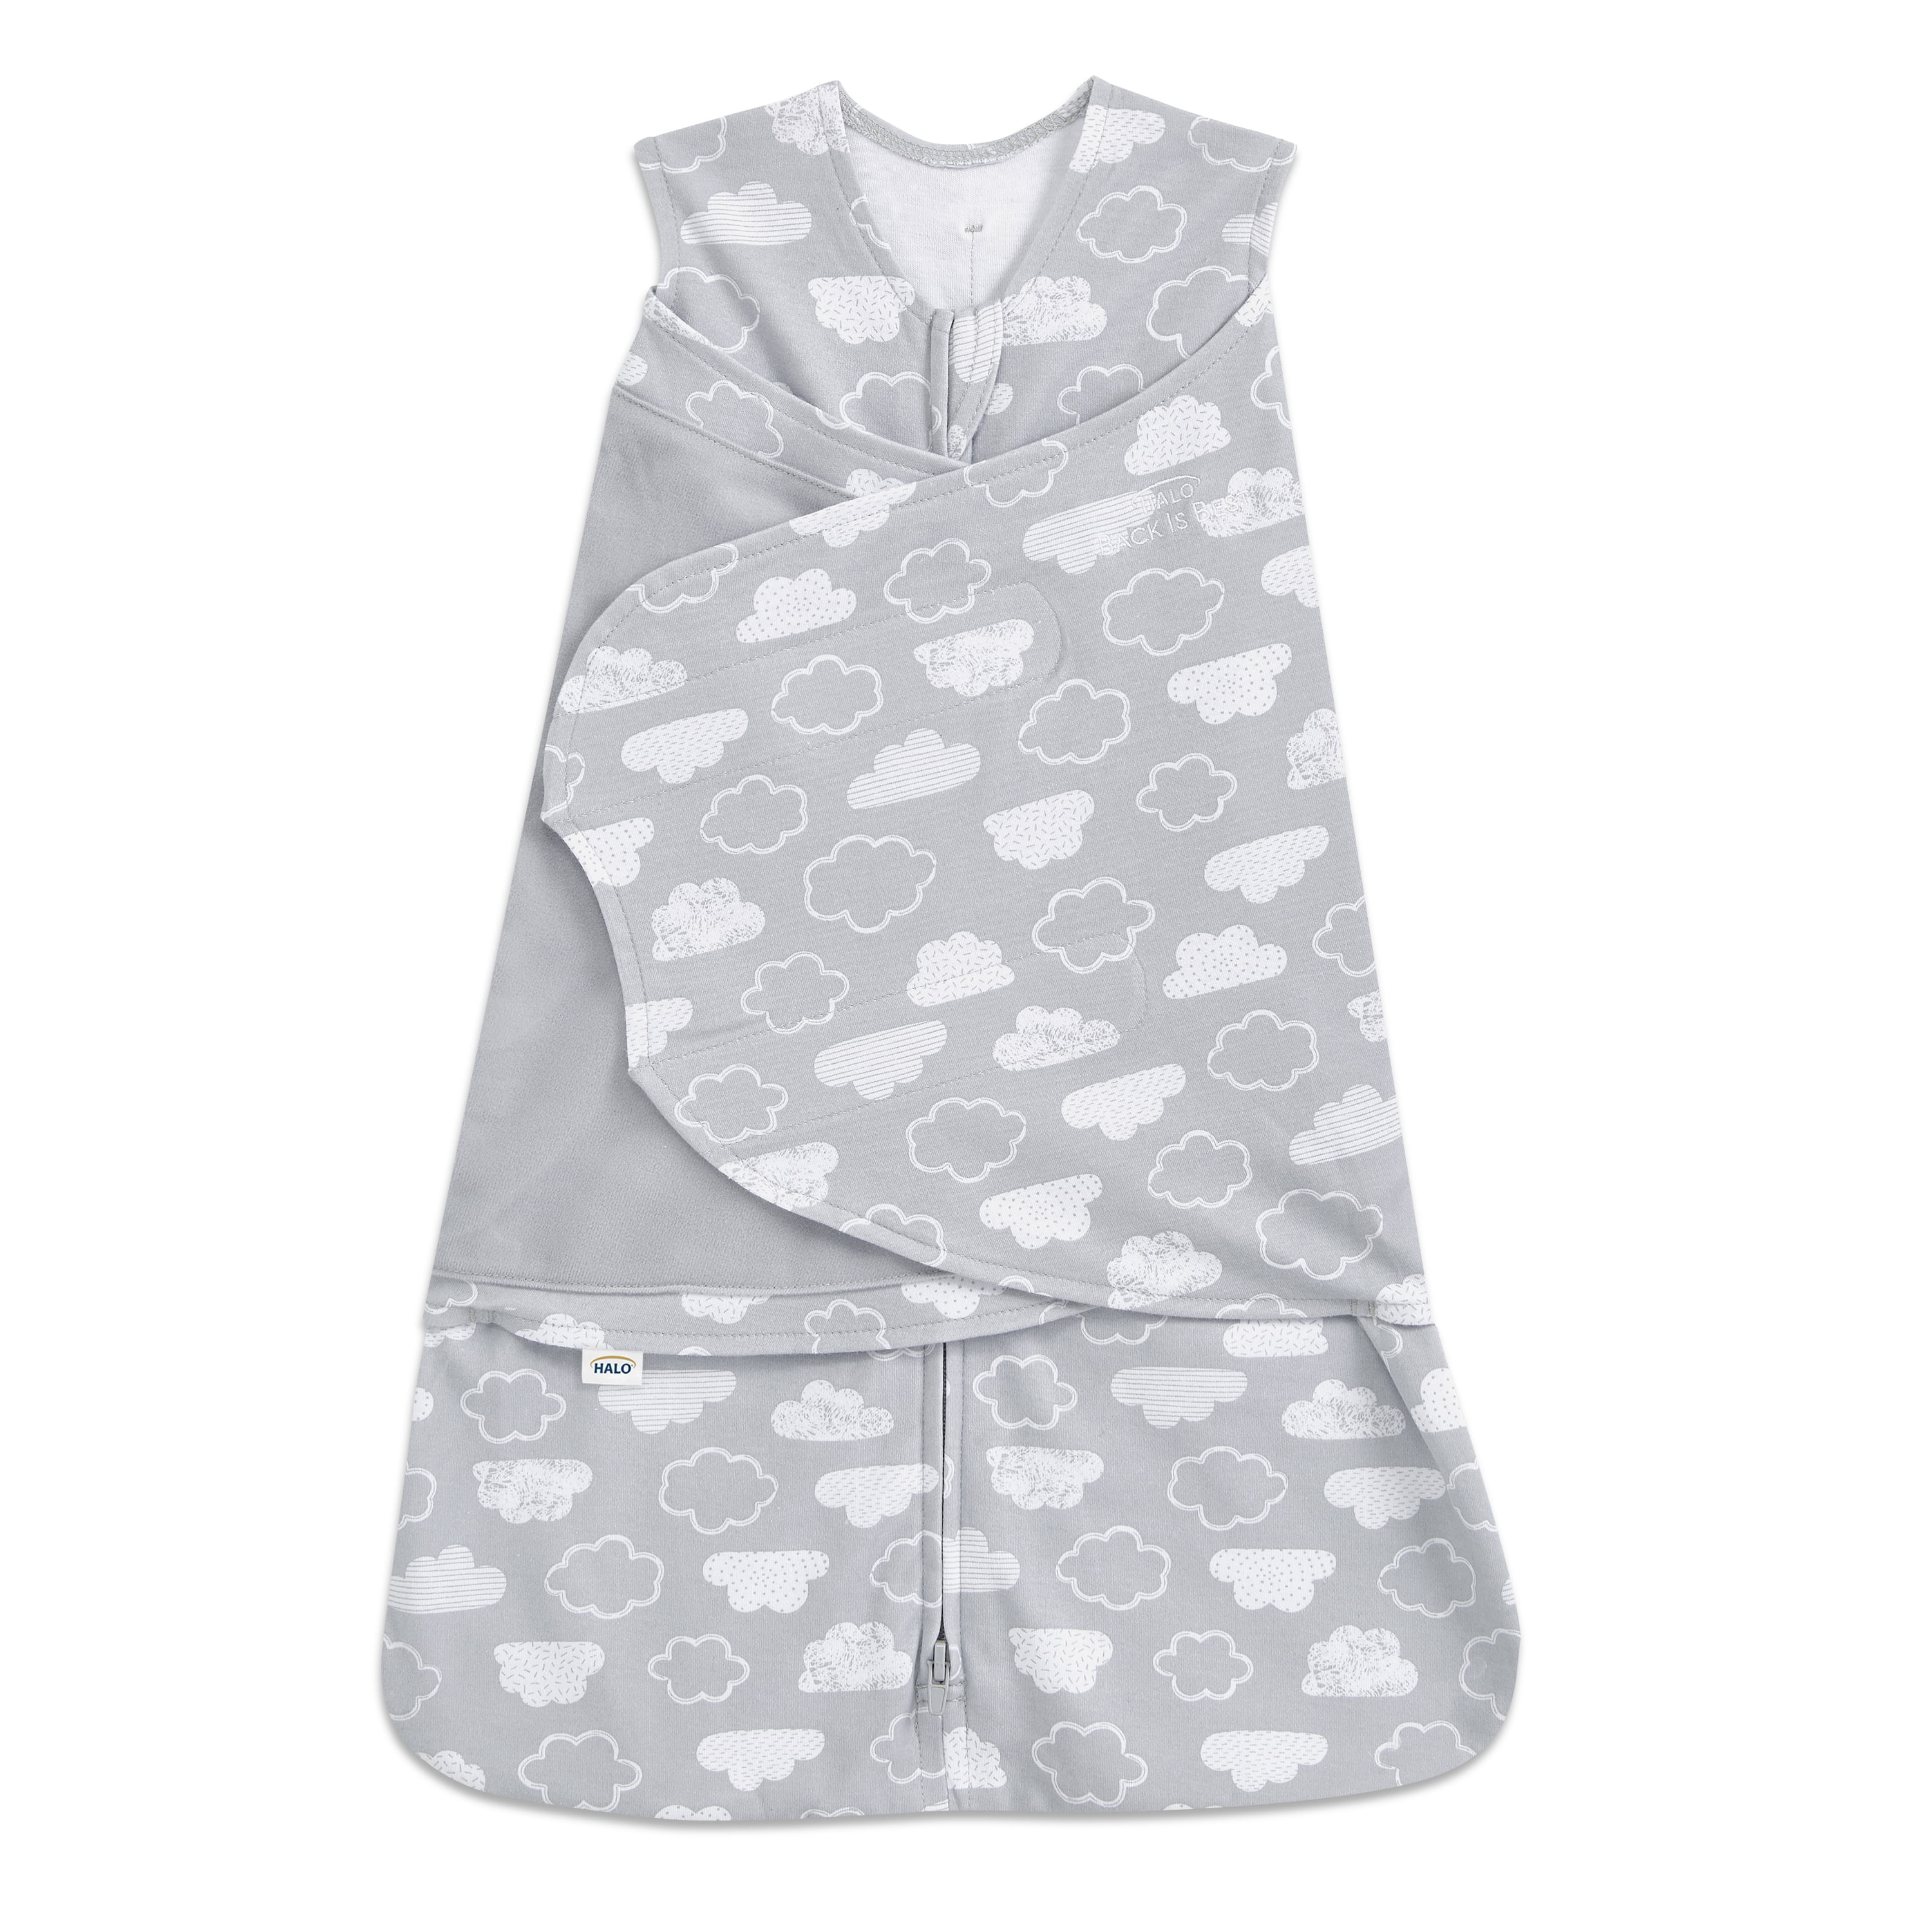 Halo Sleepsack Baby Swaddle 100% Cotton Muslin-Newborn 0-3 Months-Grey Circles Print 